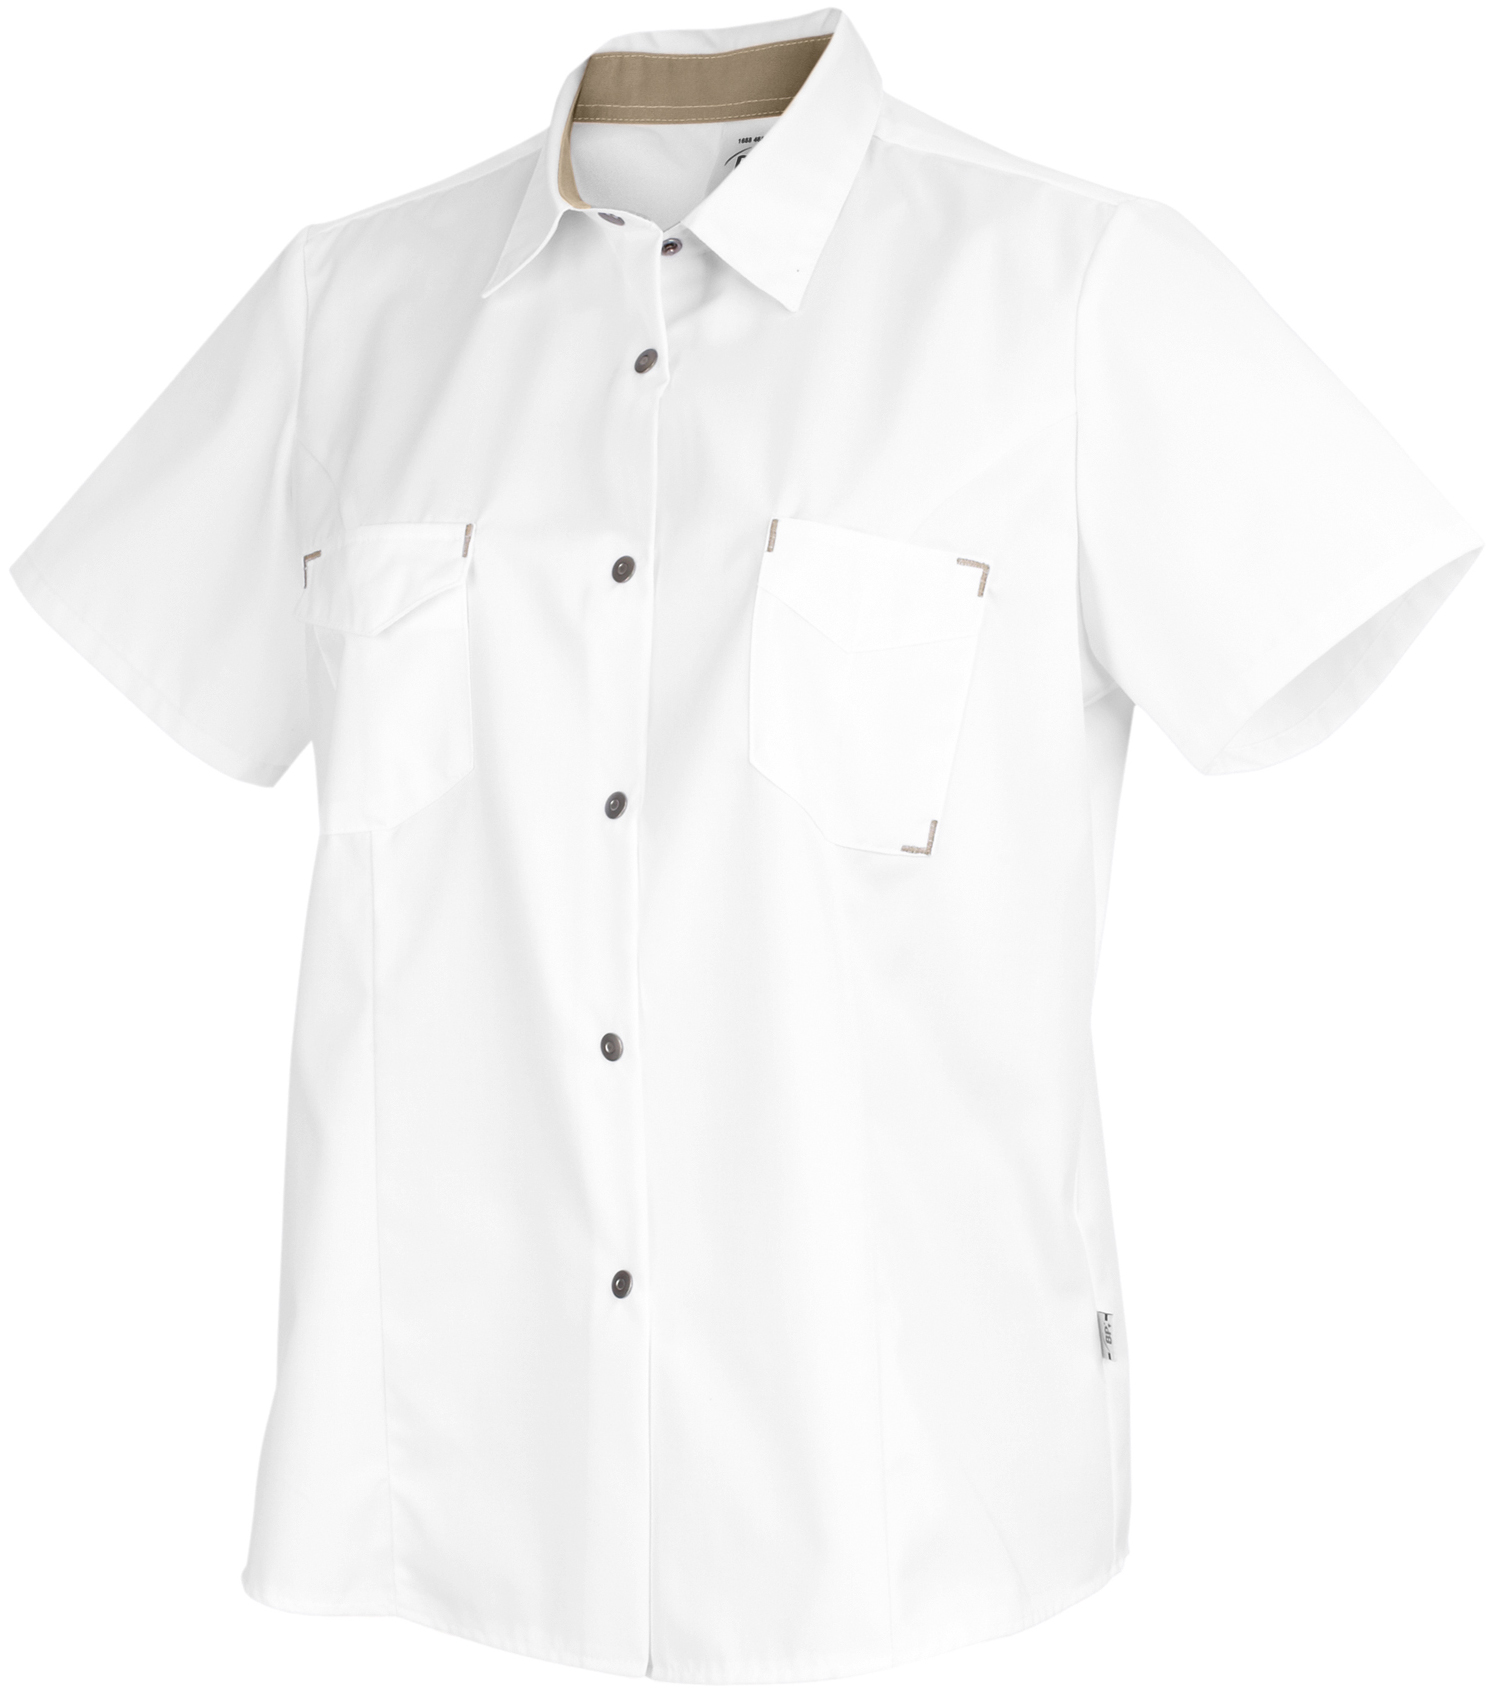 BP Damenbluse Gastronomiekleidung Cateringkleidung Arbeitsshirt Berufsshirt weiß ca 150 g